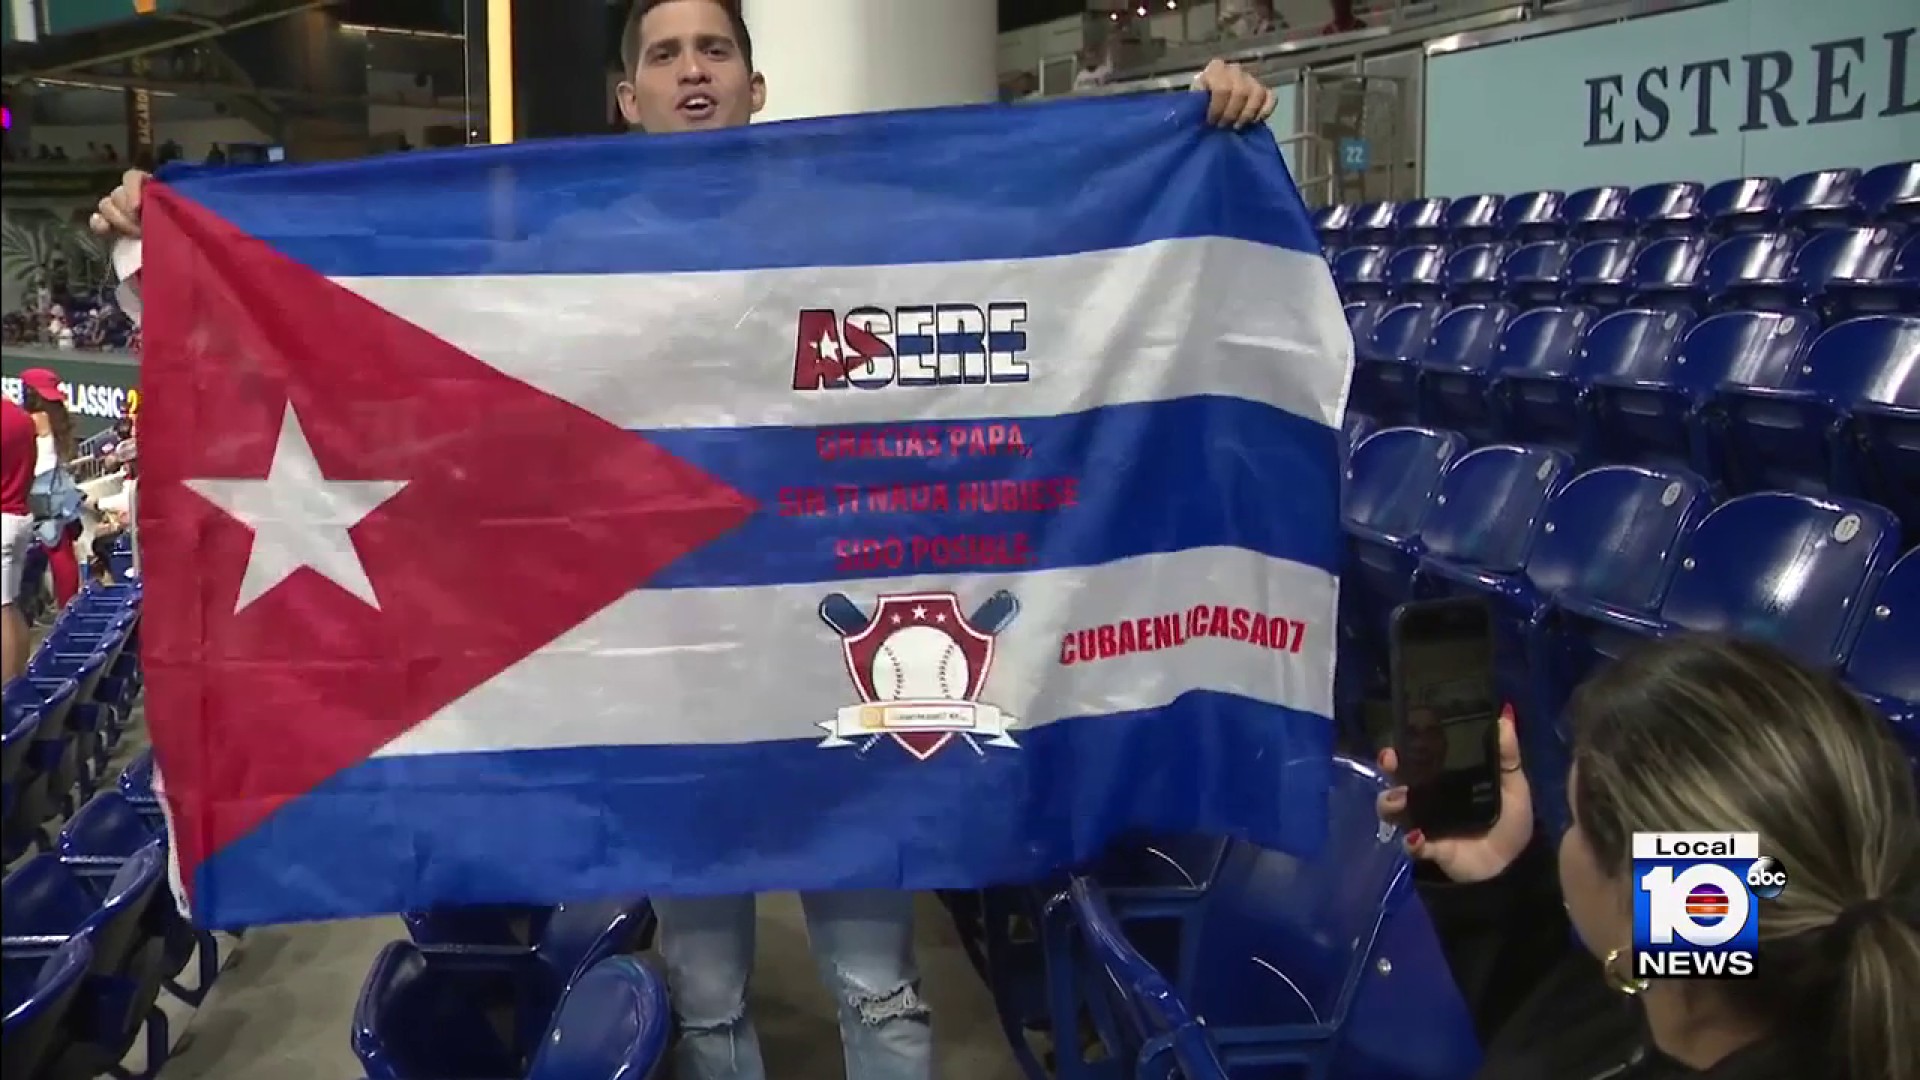 César Prieto: Cuban baseball player defects on Florida trip - BBC News